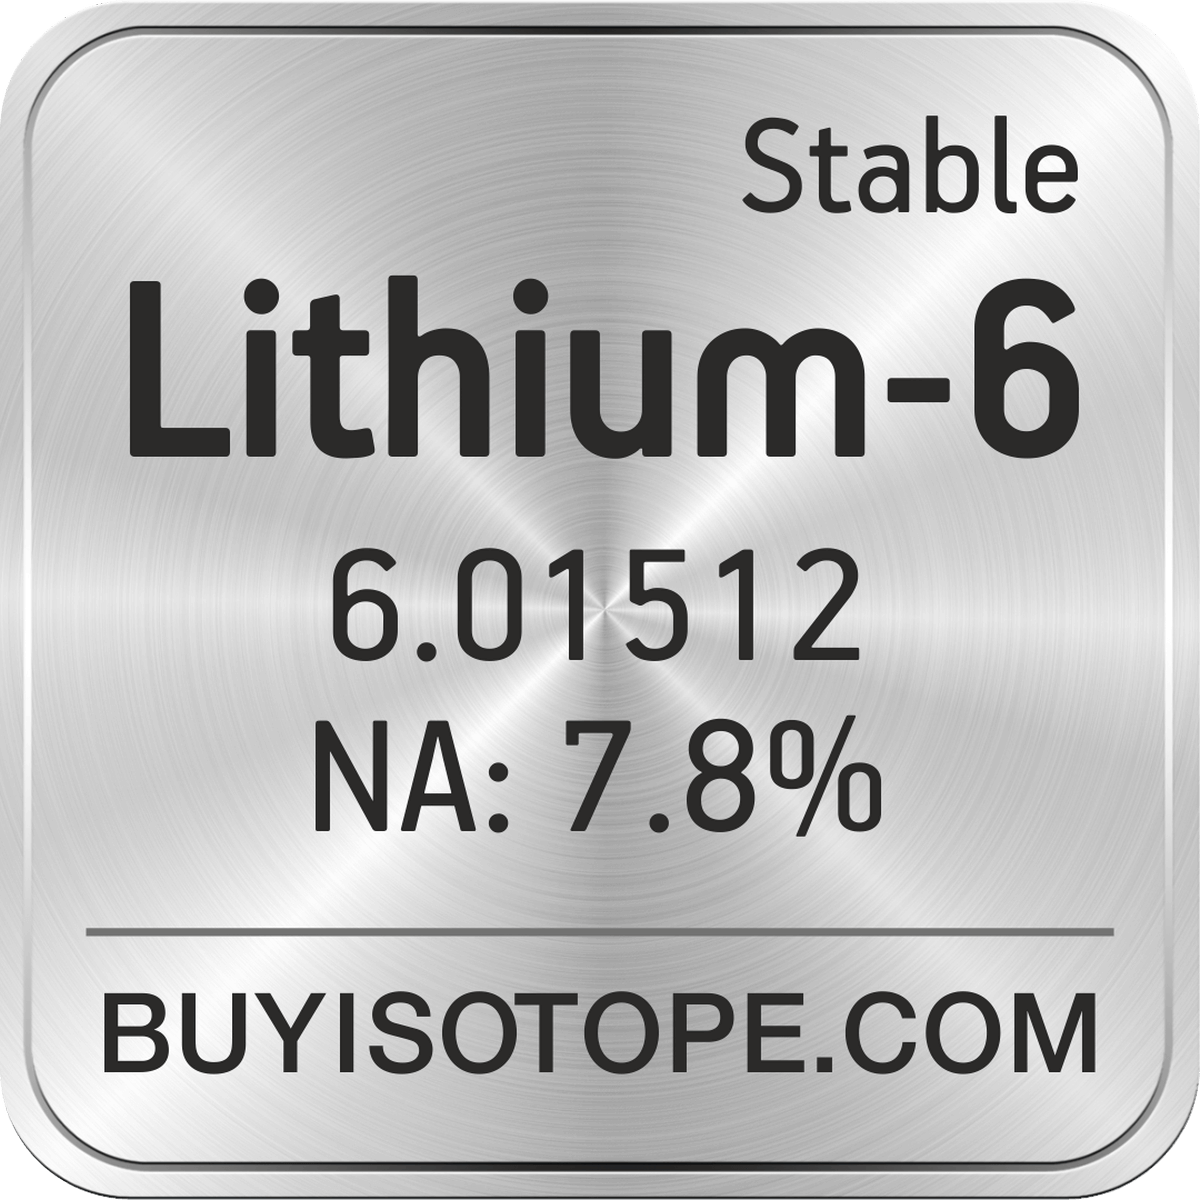 Lithium-6, Lithium-6 Isotope, Enriched Lithium-6, Lithium-6 Metal